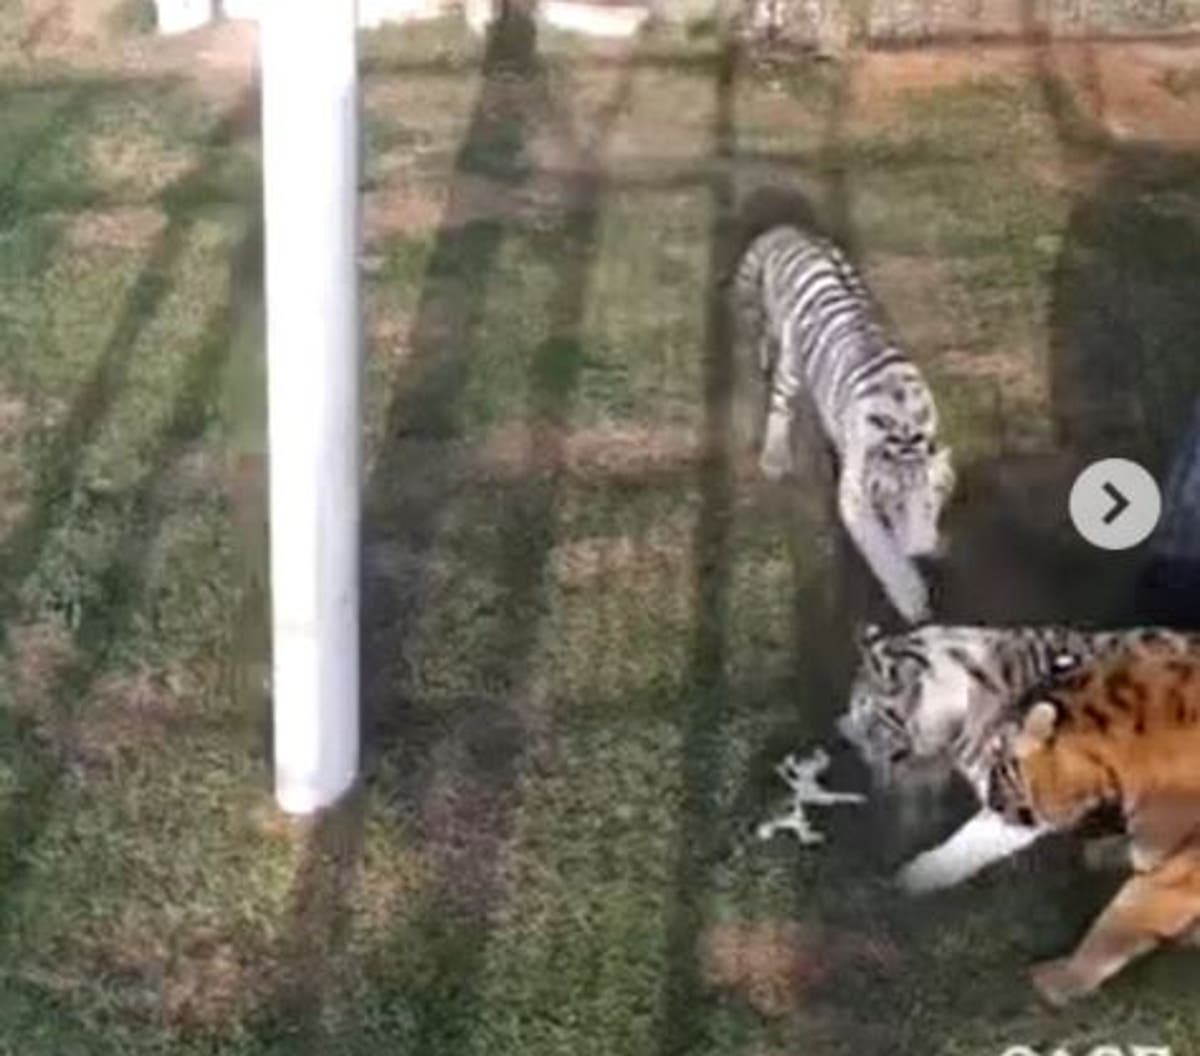 Dubai princess shares video of tiny kitten standing up to three tigers